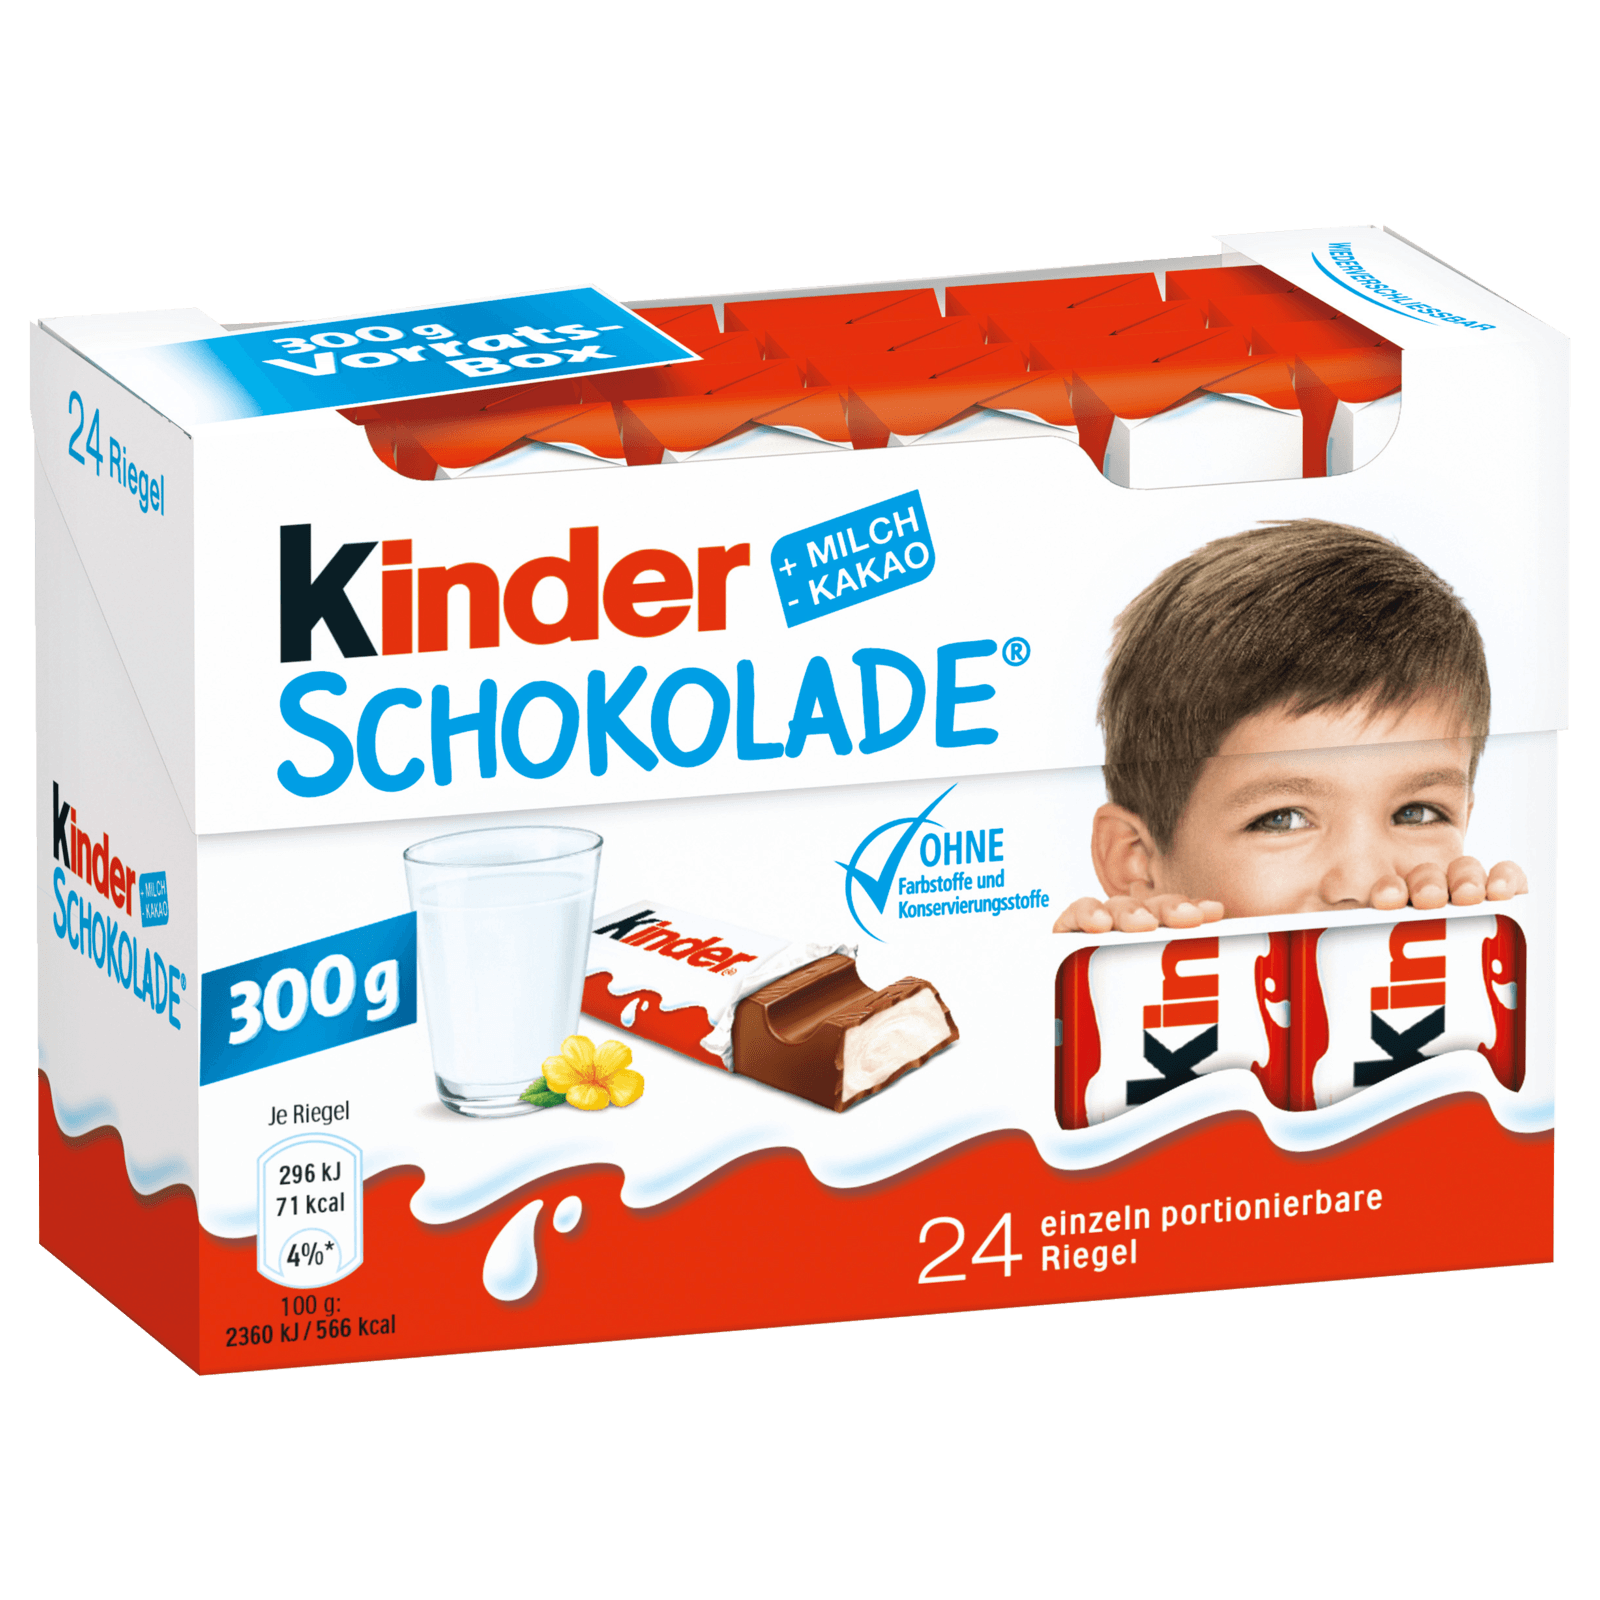 Киндер шоколад. Kinder шоколад. Мальчик с Киндер шоколада. Продукты Киндер. Kinder drive